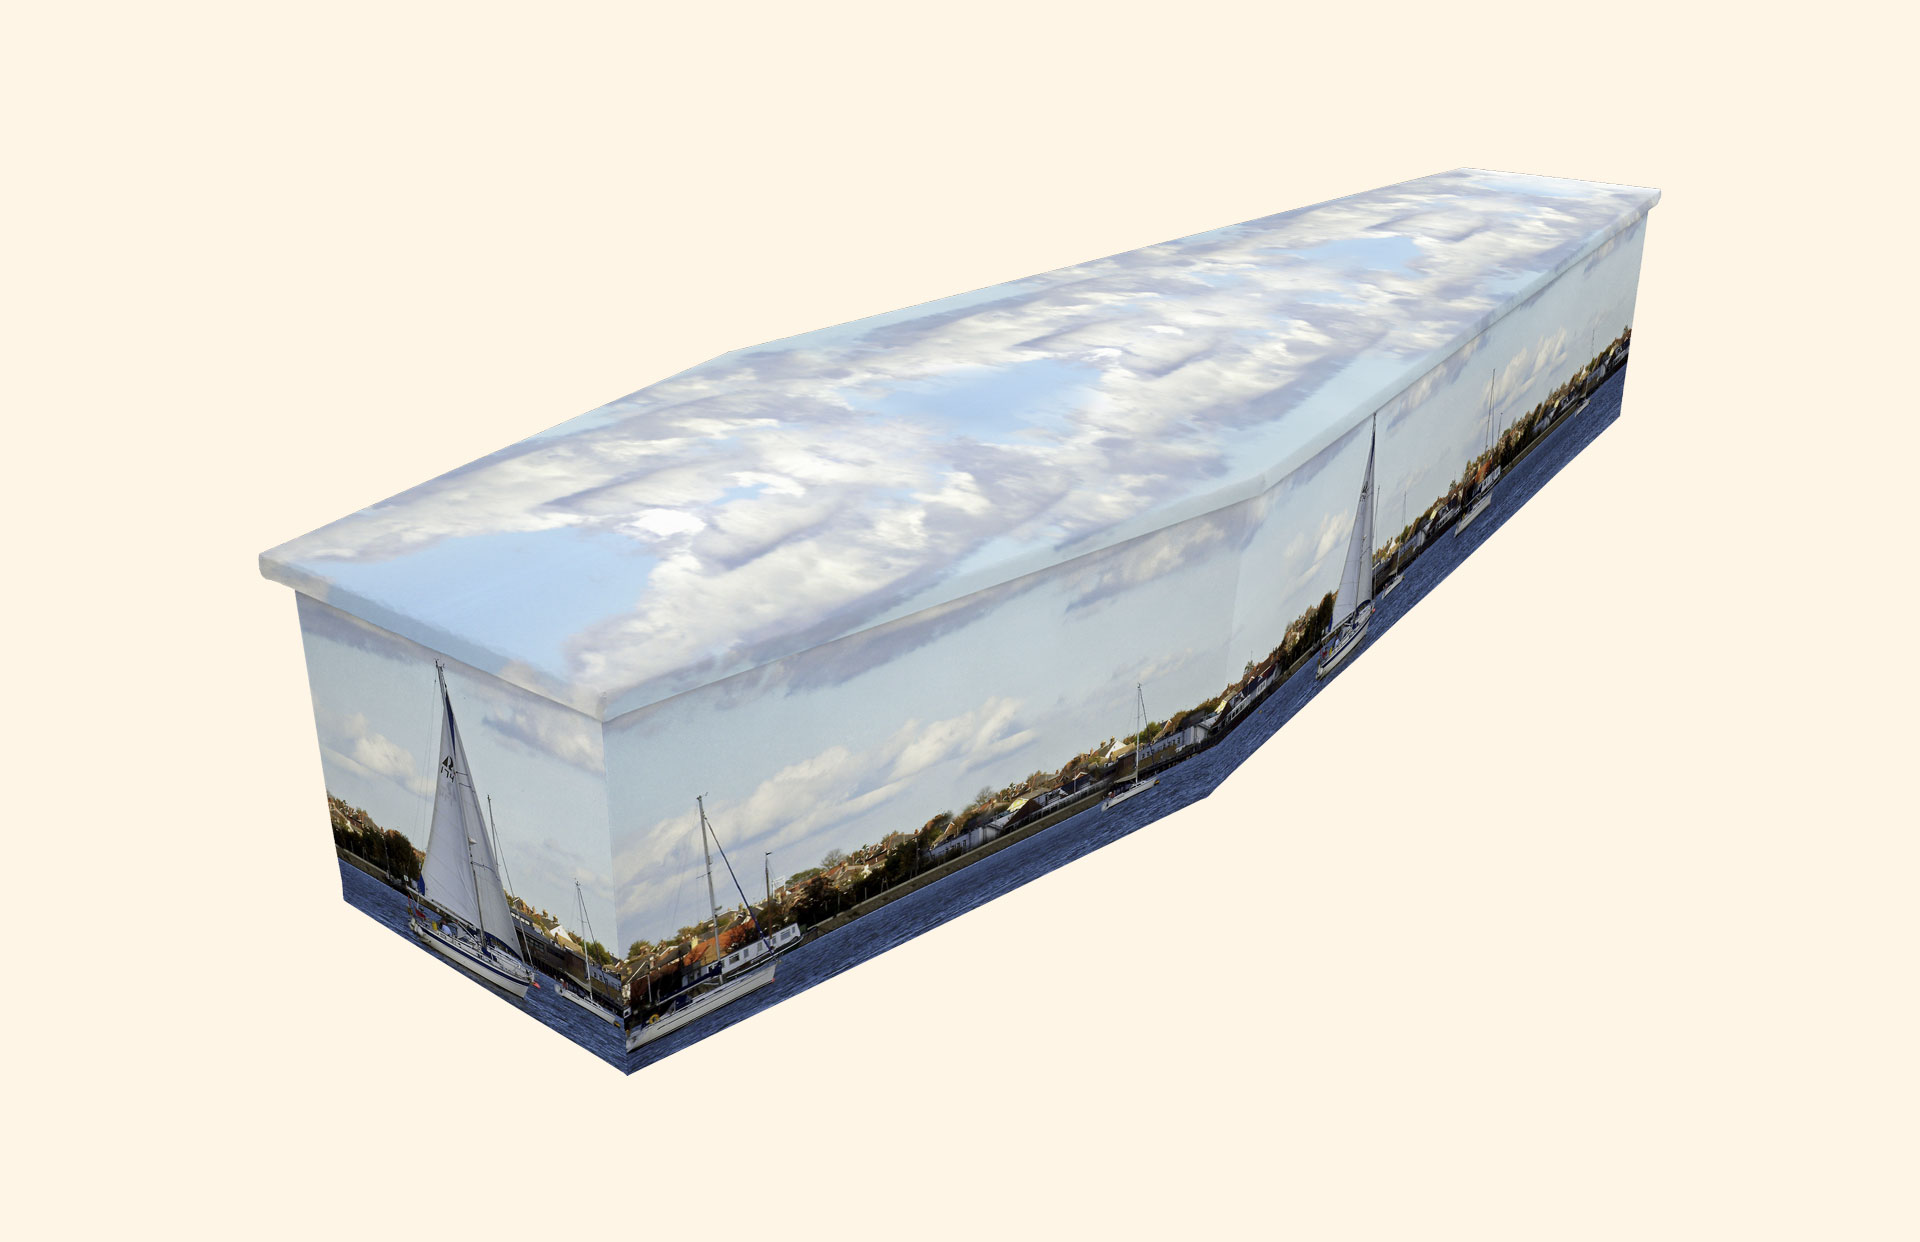 Set Sail design on a cardboard coffin